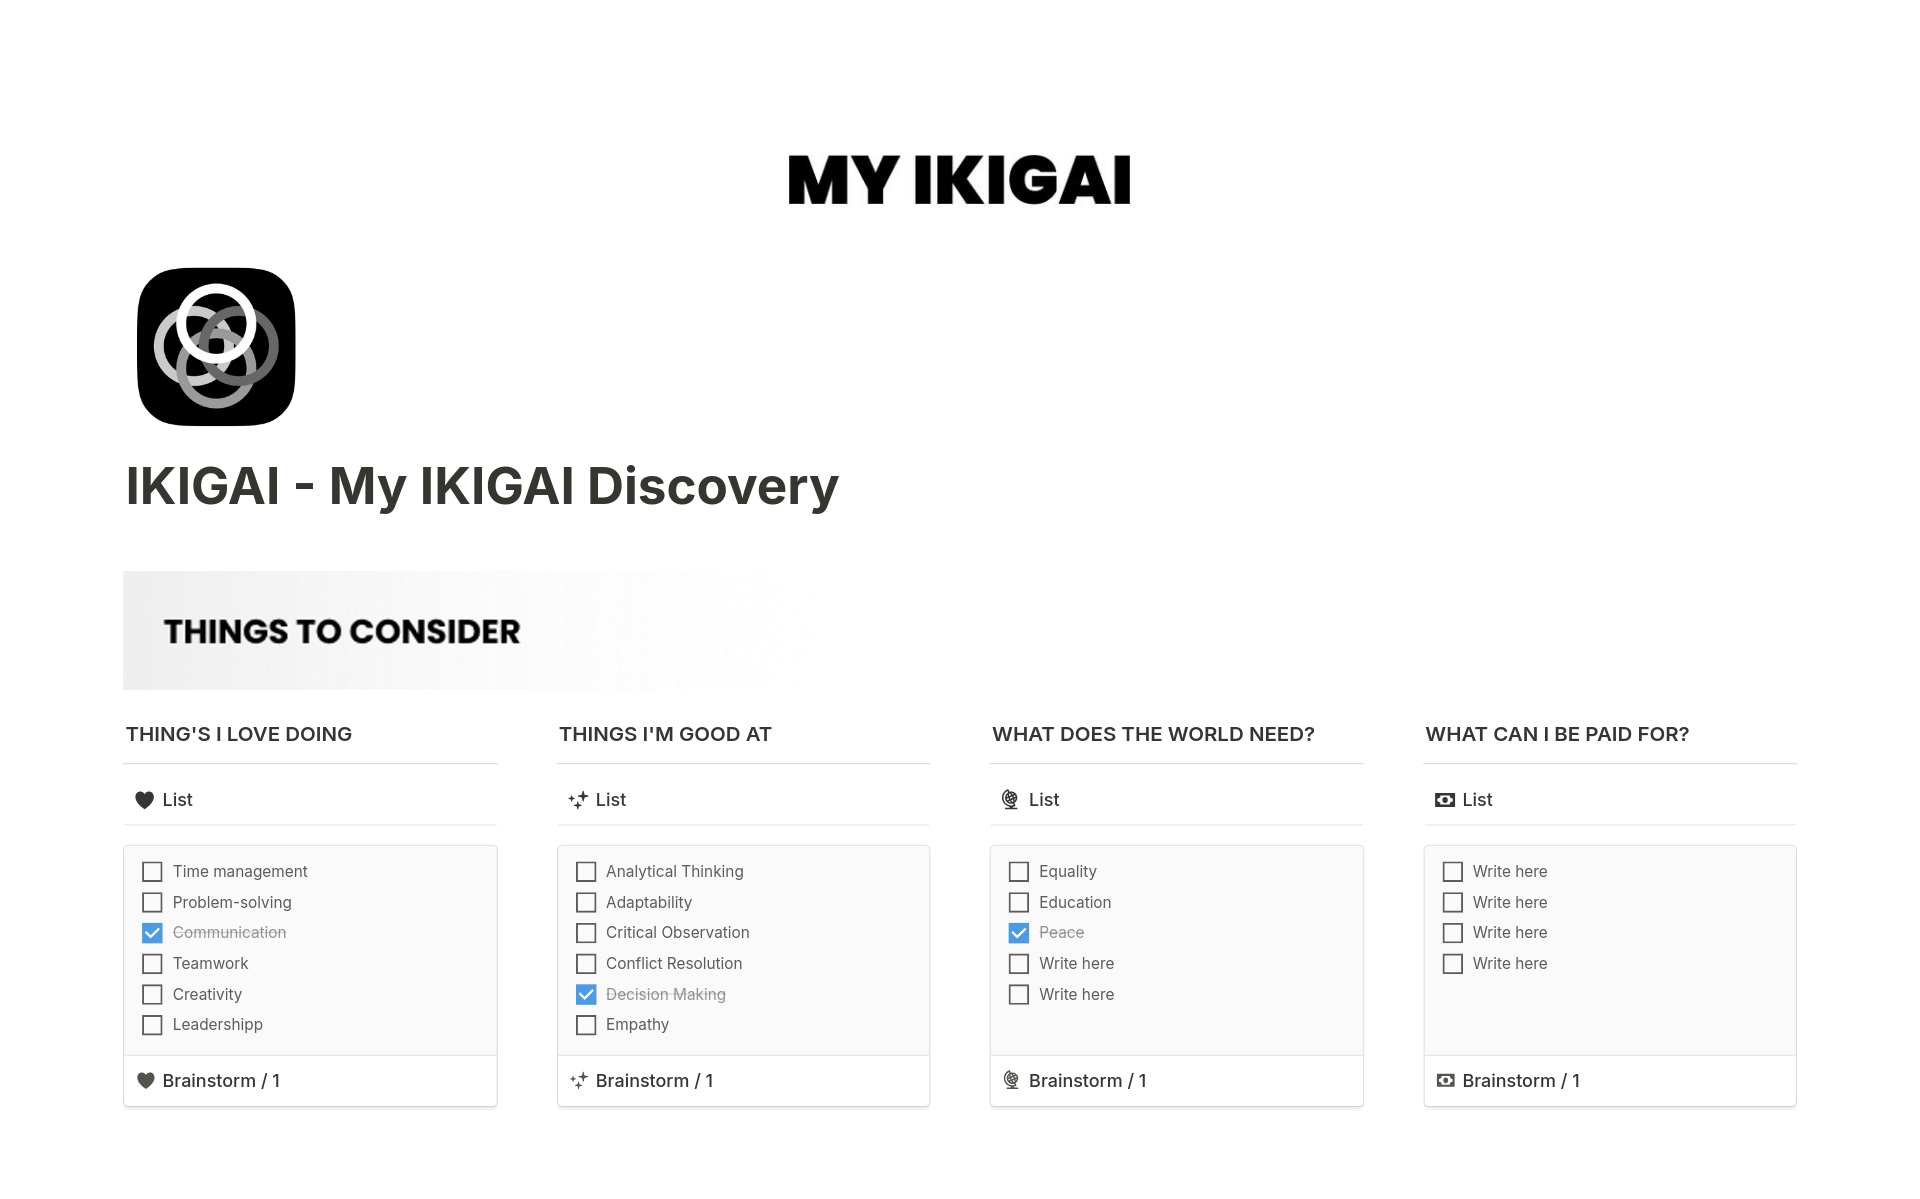 Vista previa de una plantilla para IKIGAI - My IKIGAI Discovery